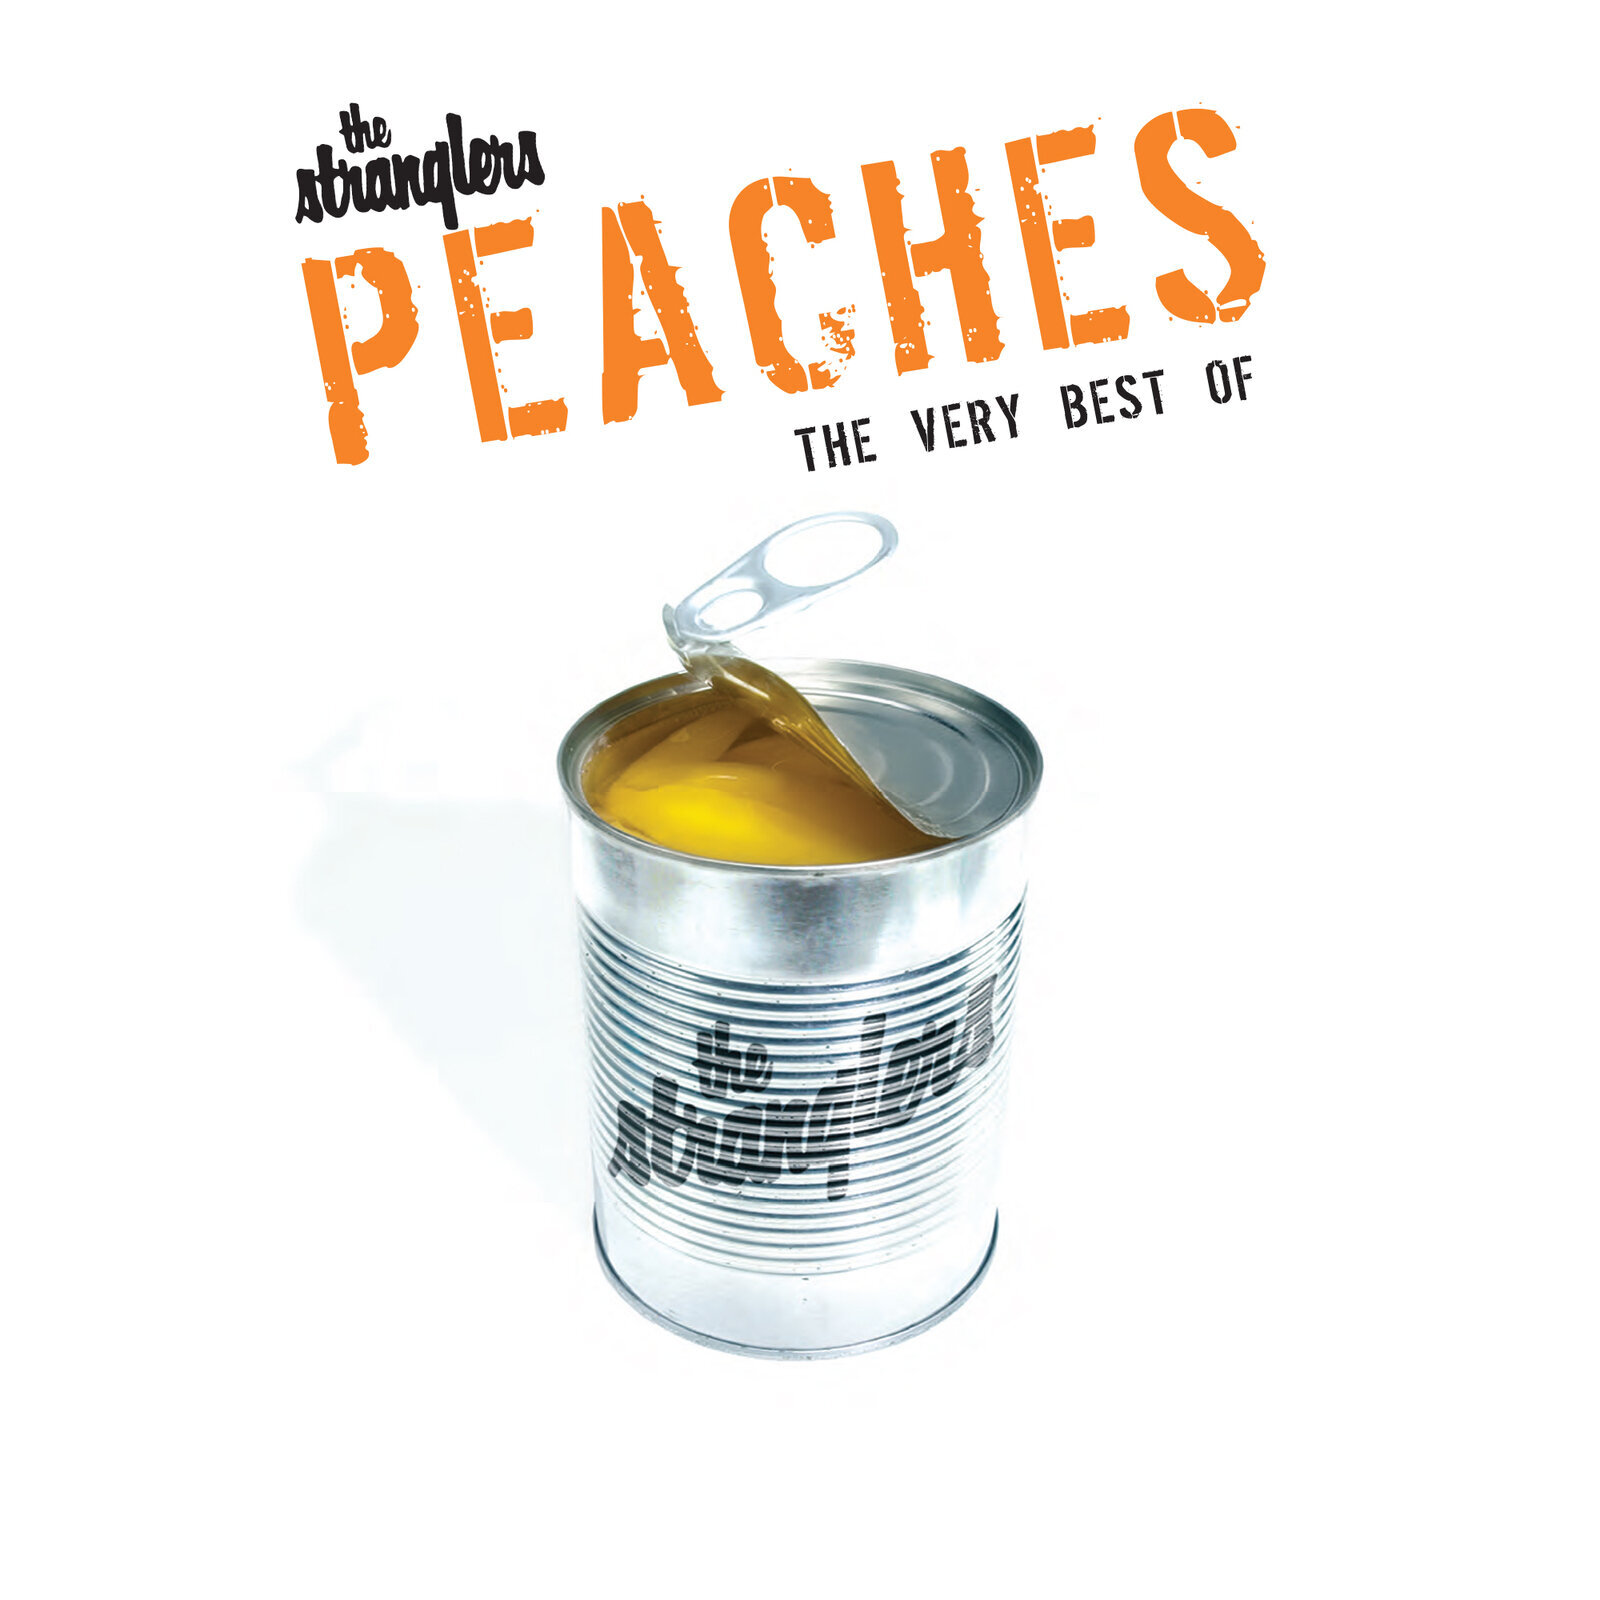 Vinyl Record Stranglers - Peaches - The Very Best Of (180g) (2 LP)